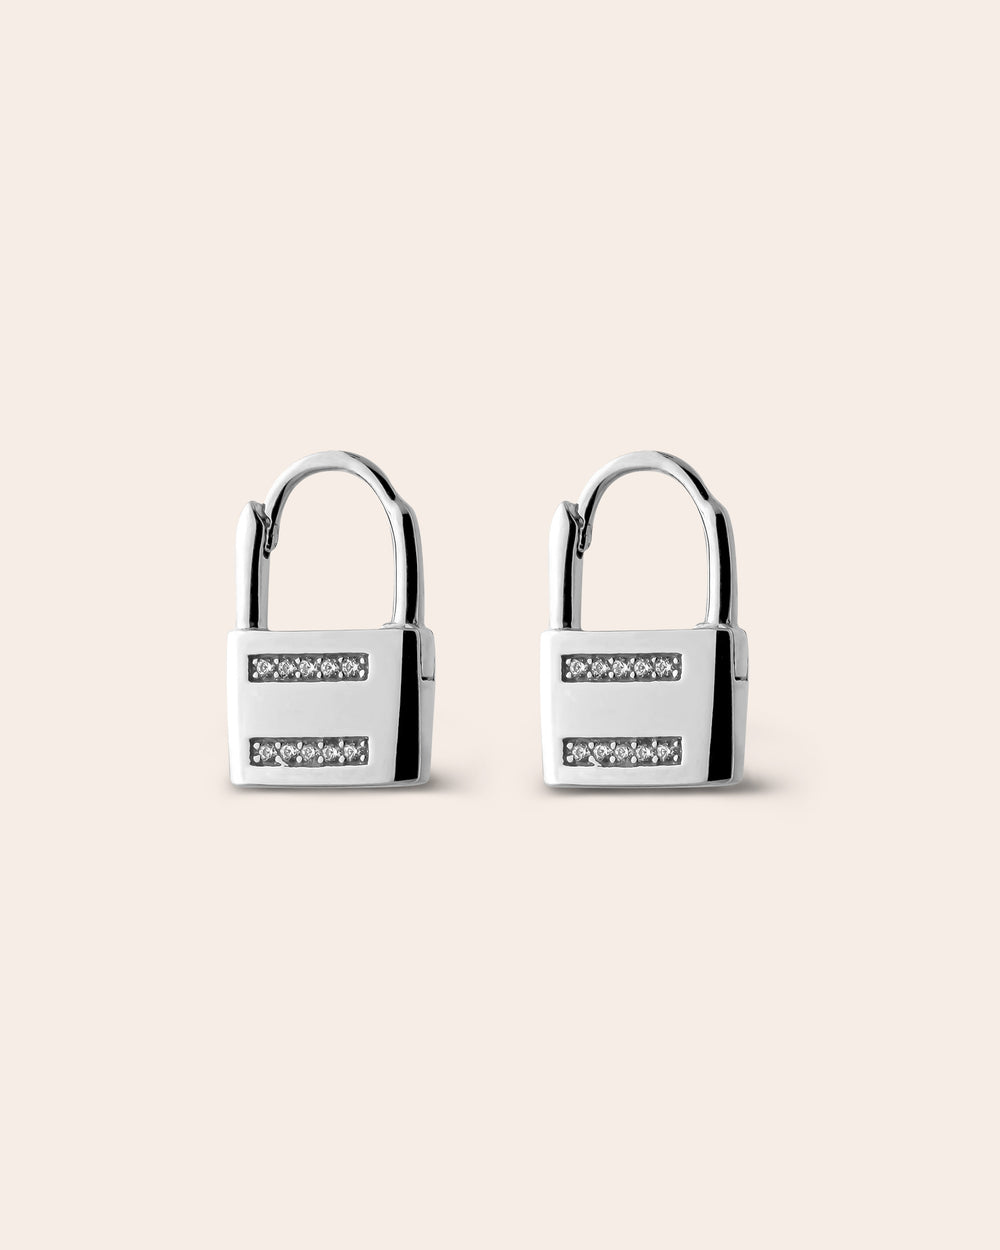 Passcode Protected - The Padlock Earrings